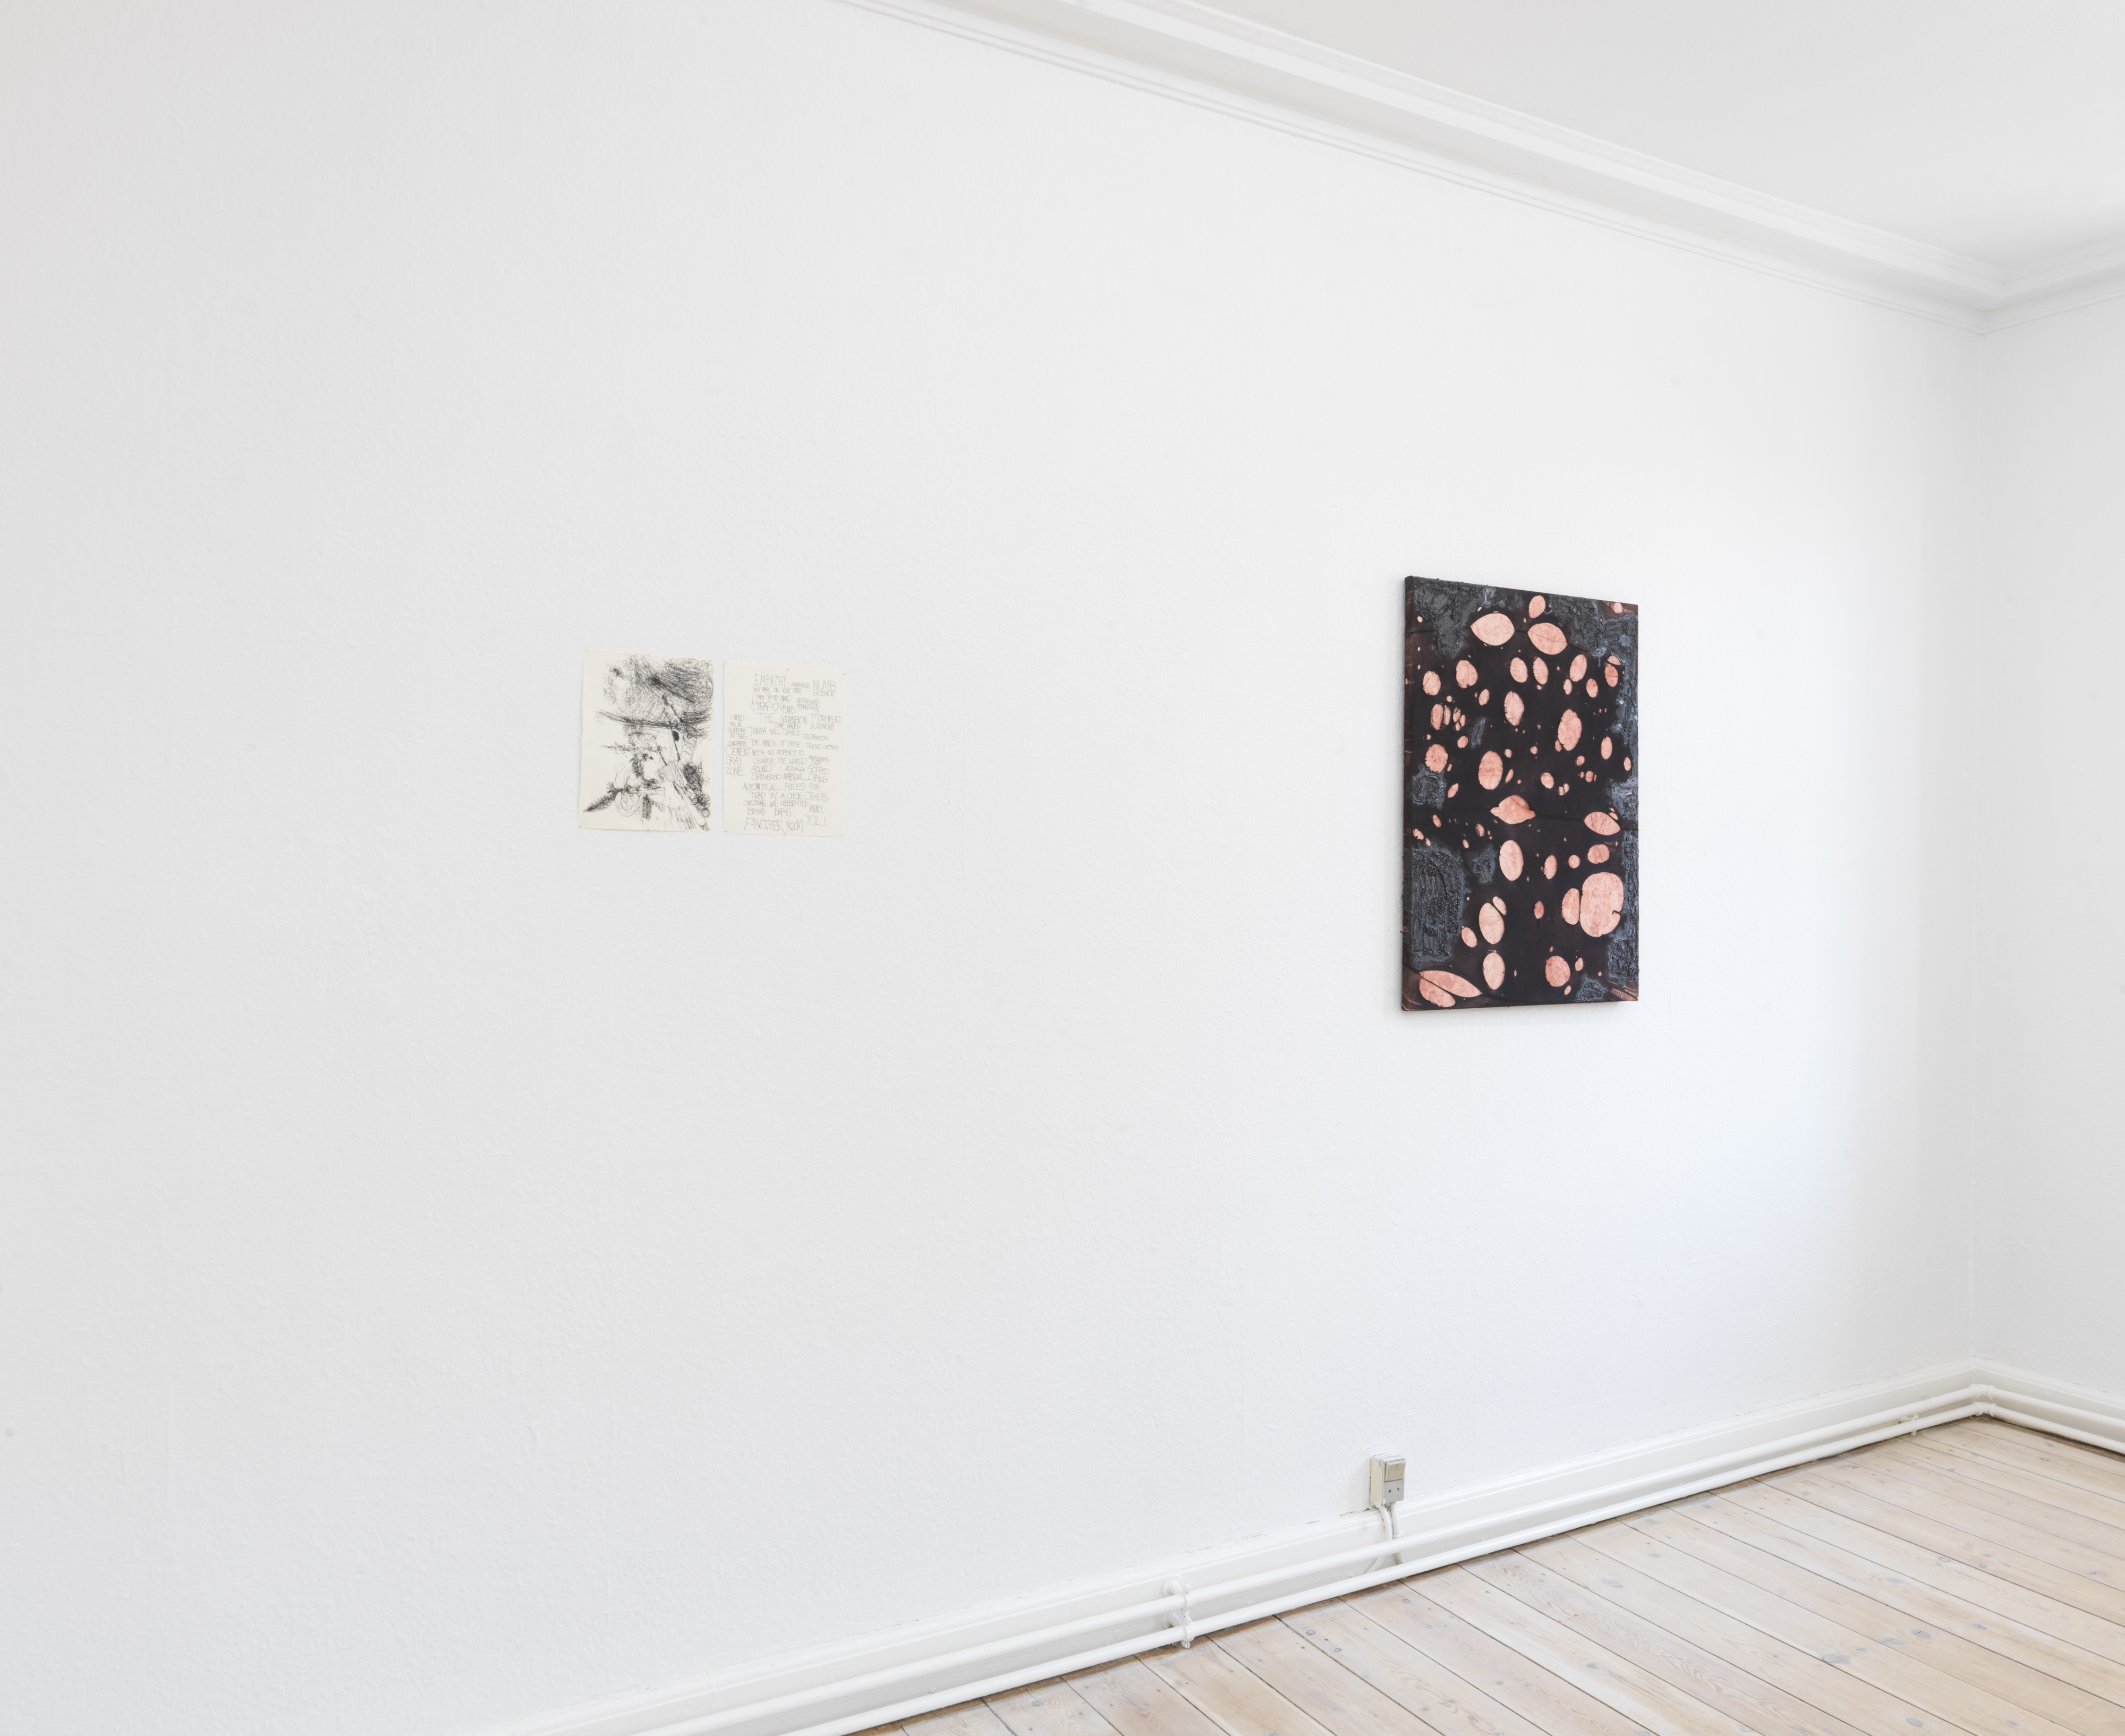 Javier Alvarez Sagredo, Installation view at Matteo Cantarella, 19.08.22 - 30.09.22